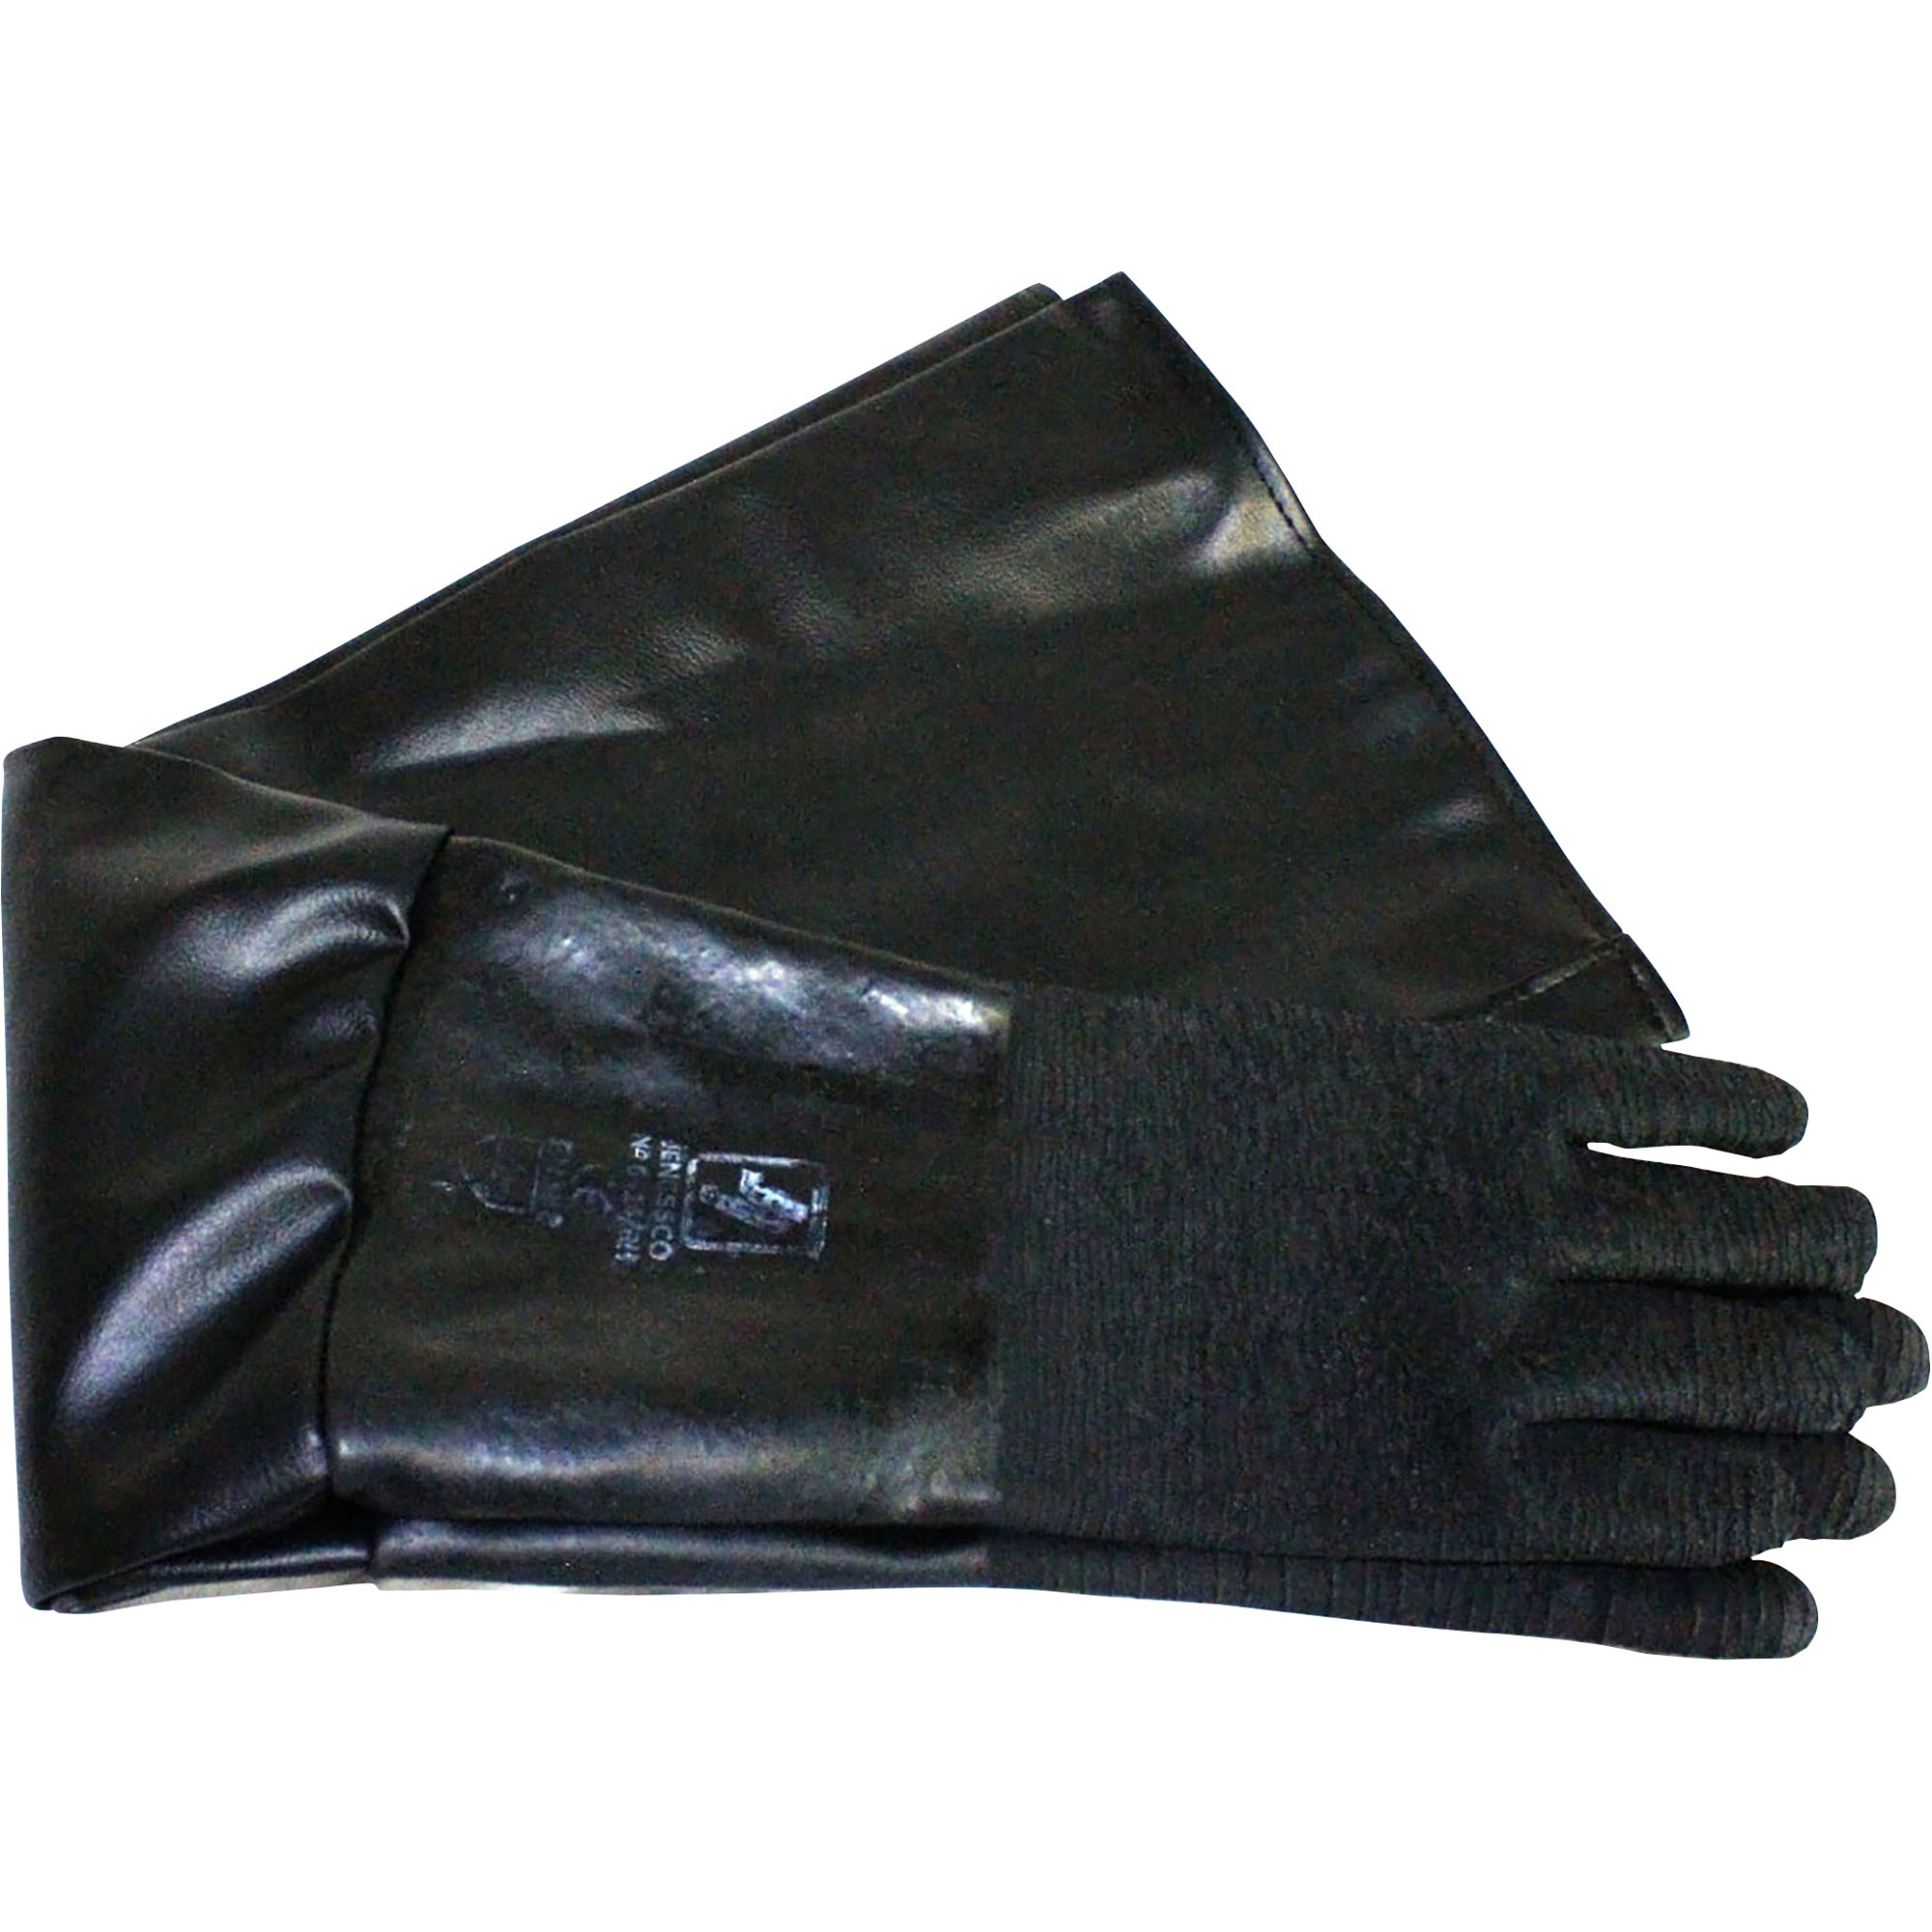 ALC Replacement Pressure Abrasive Blasting Cabinet Gloves â 6Inch x 24Inch, Pair, Model 40248